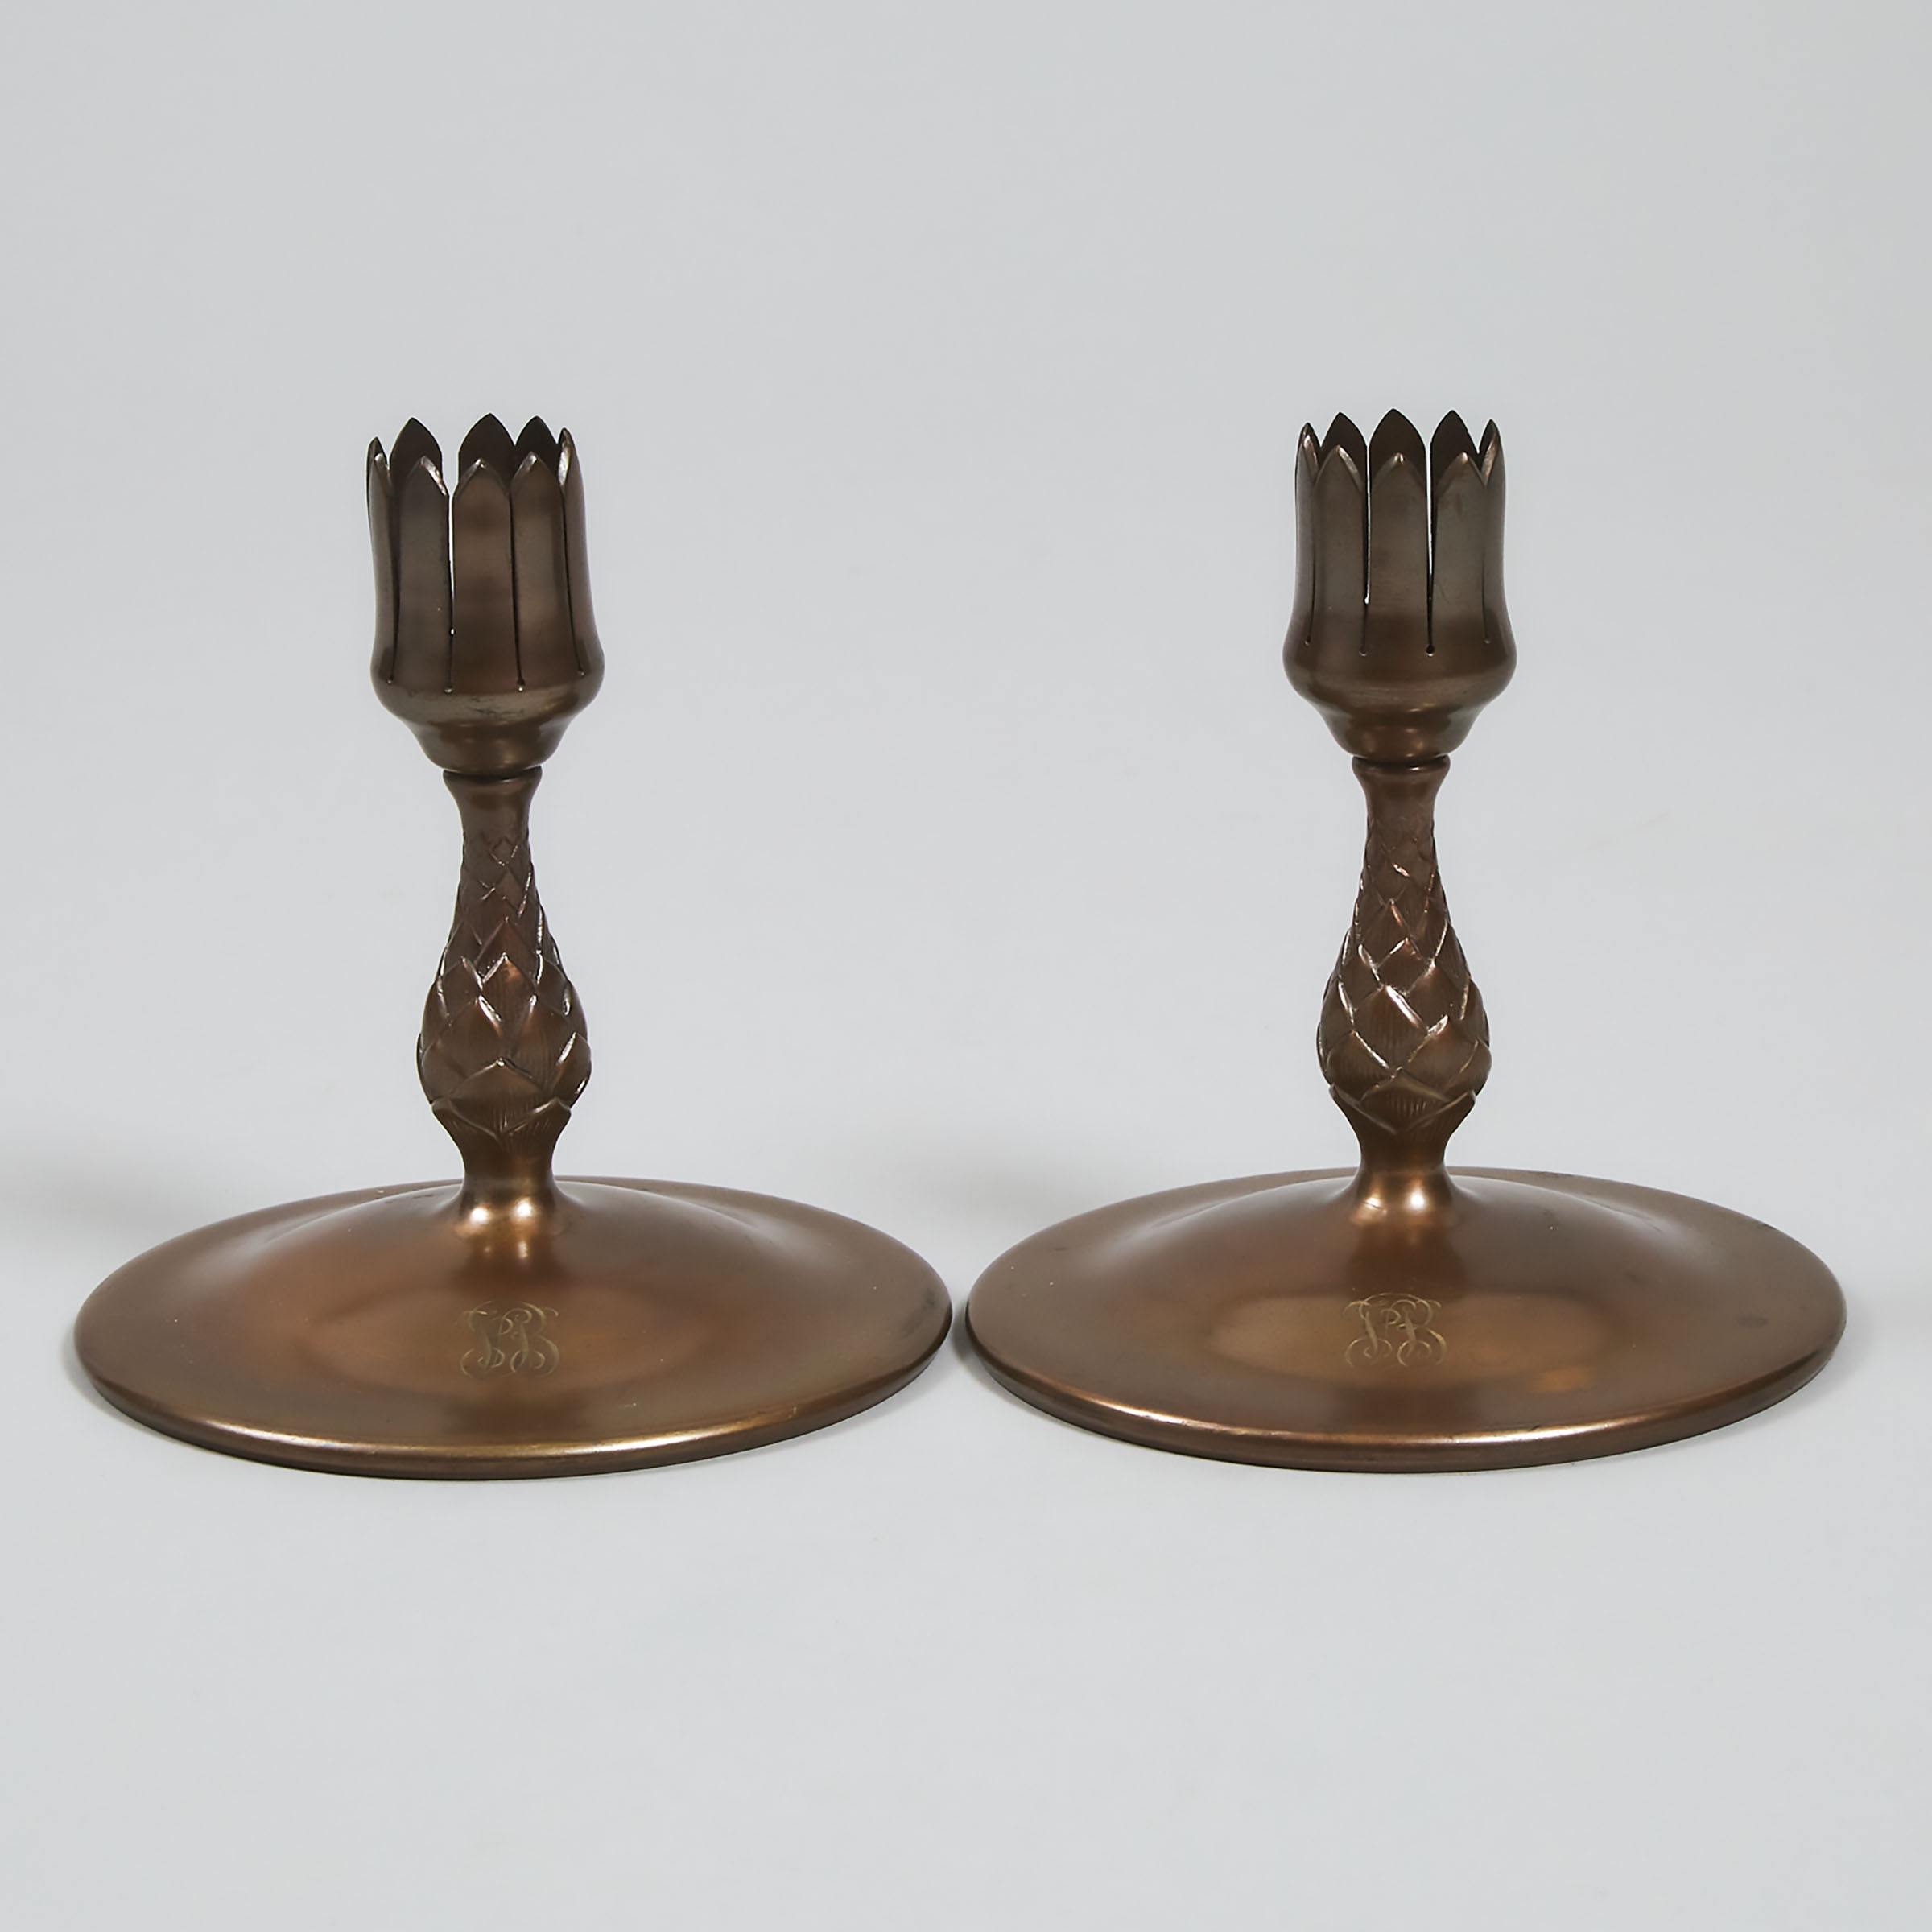 Pair of Tiffany Studios, New York, Bronze Trumpet Vase Bases, early 20th century